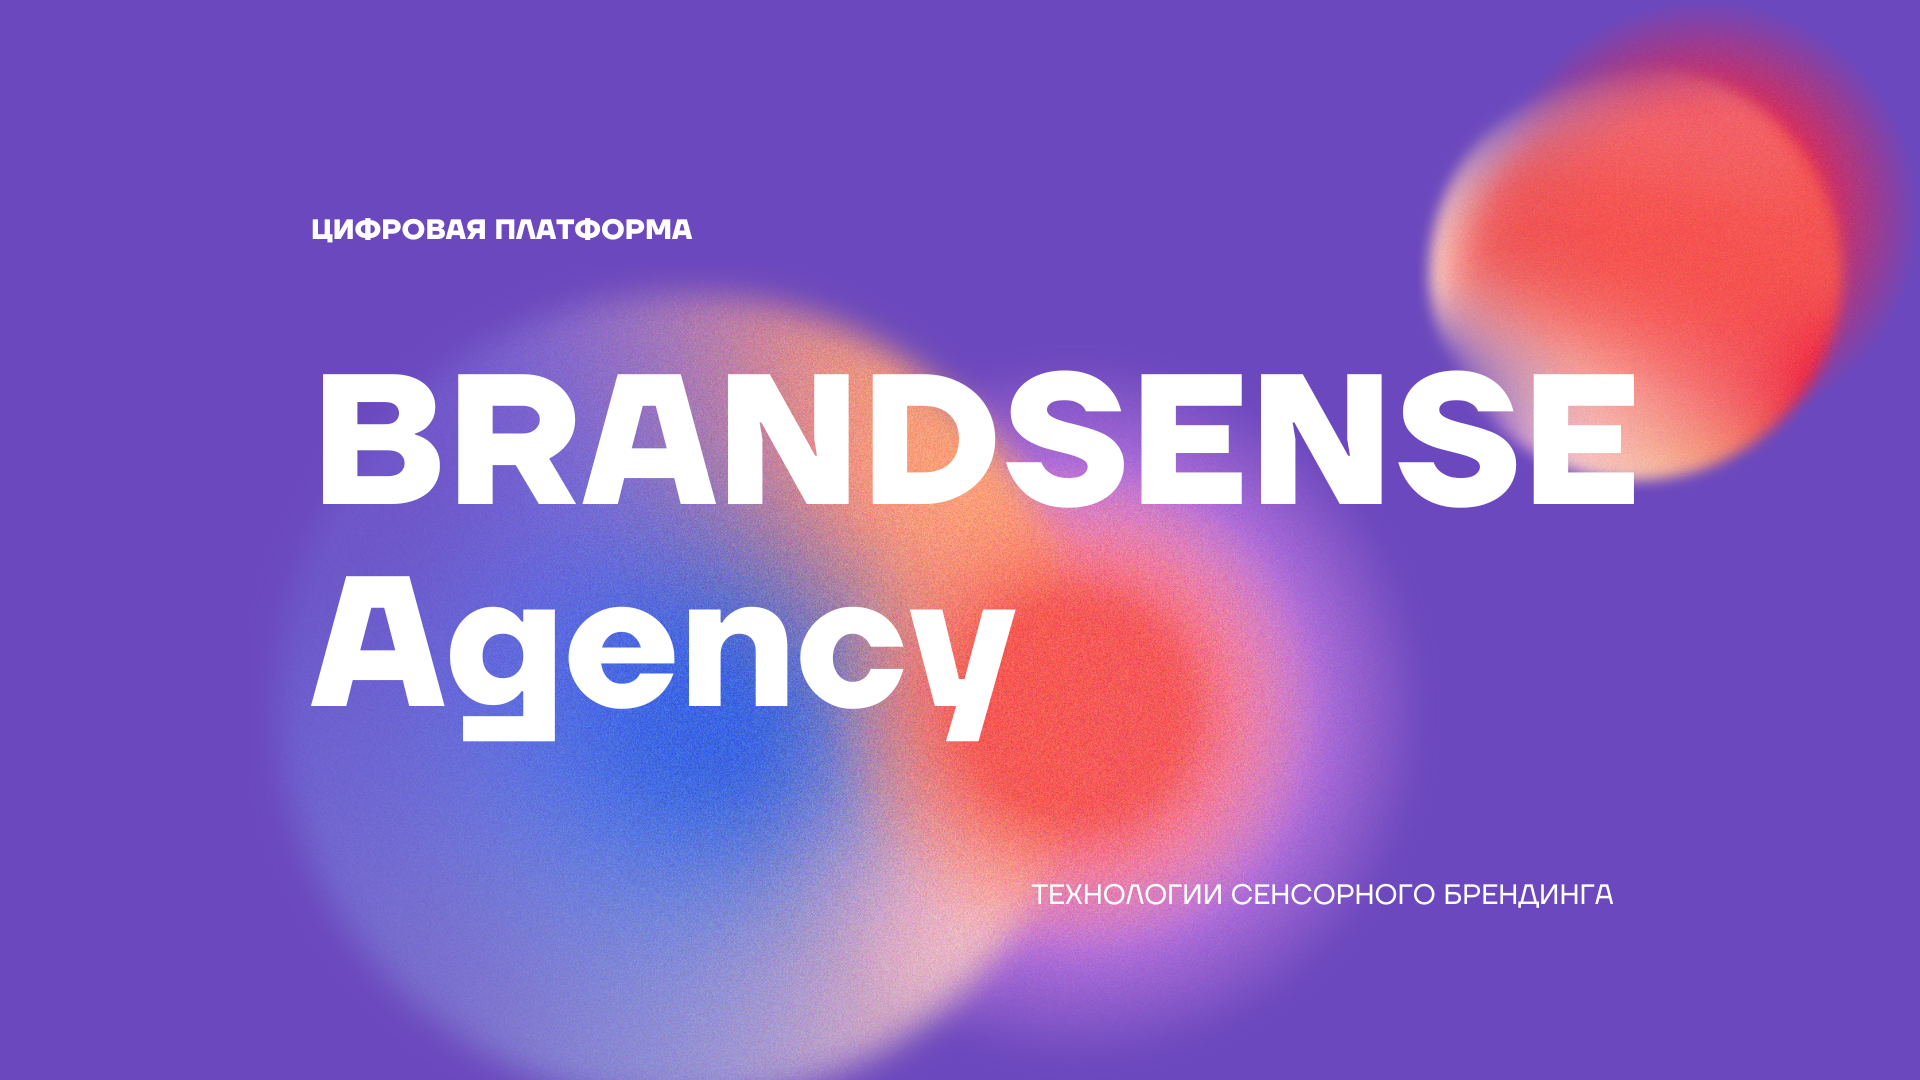 BRANDSENSE Agency